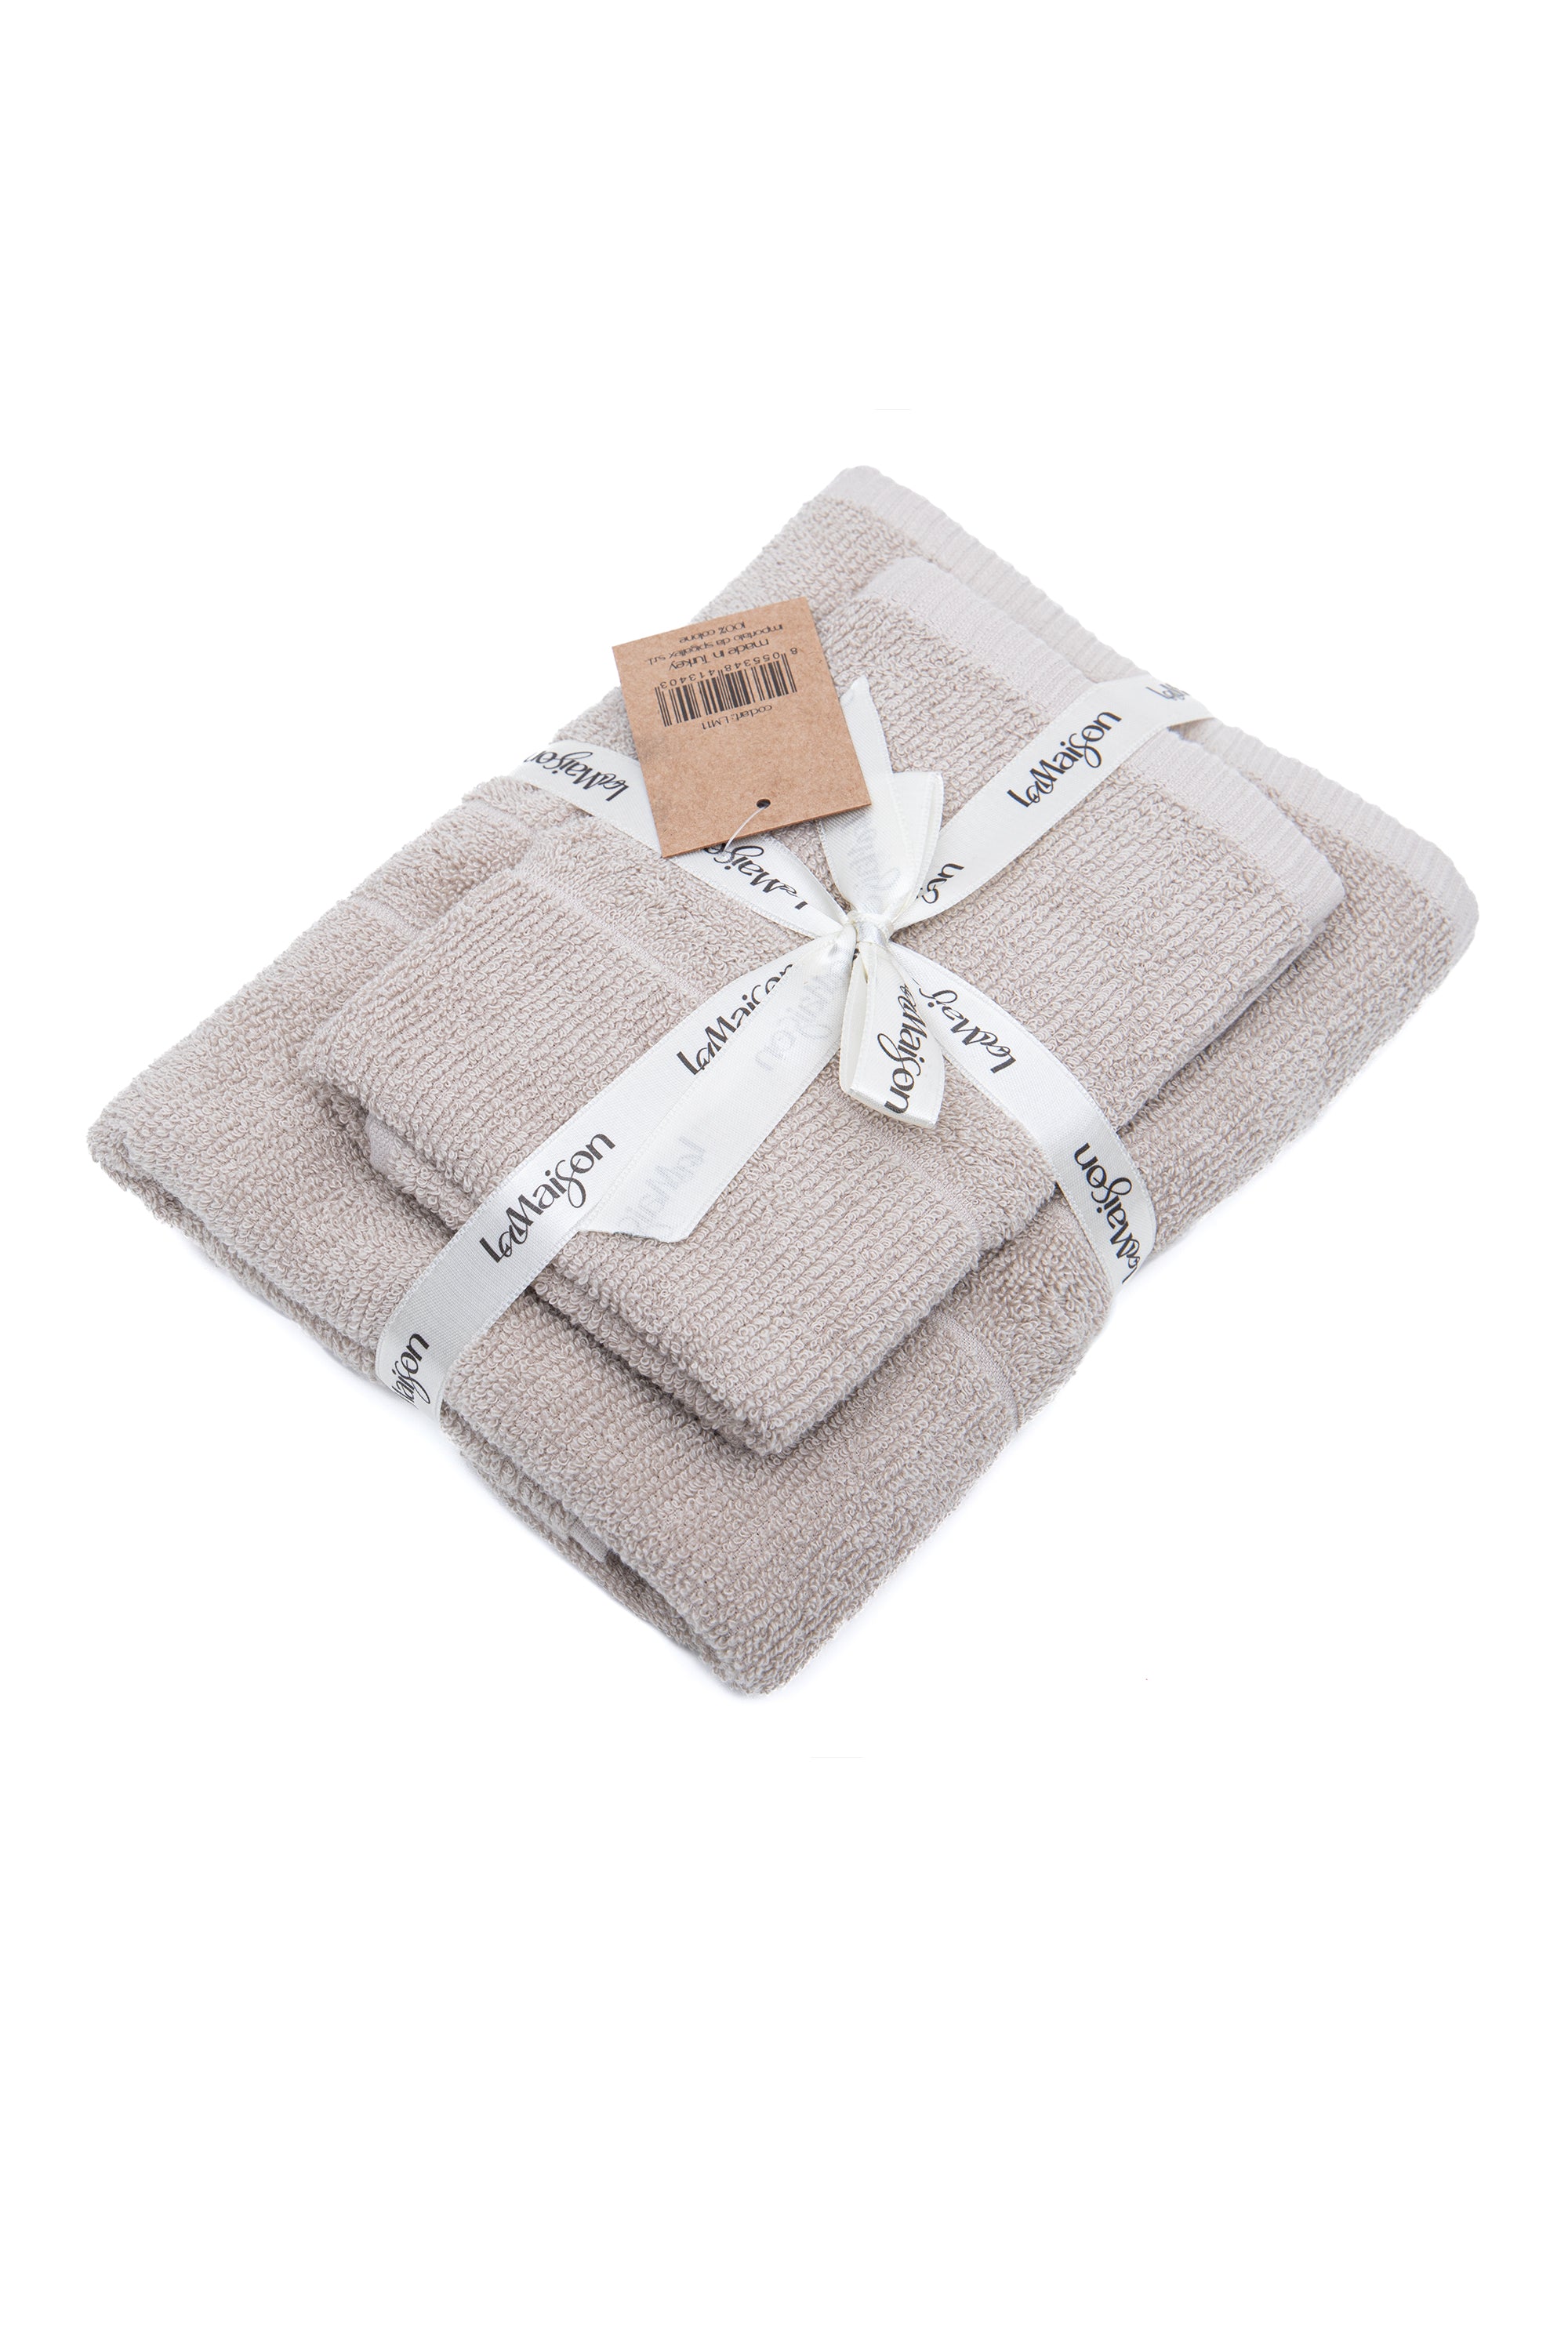 Asciugamano con ospite Beige in cotone 550gsm | In vari disegni